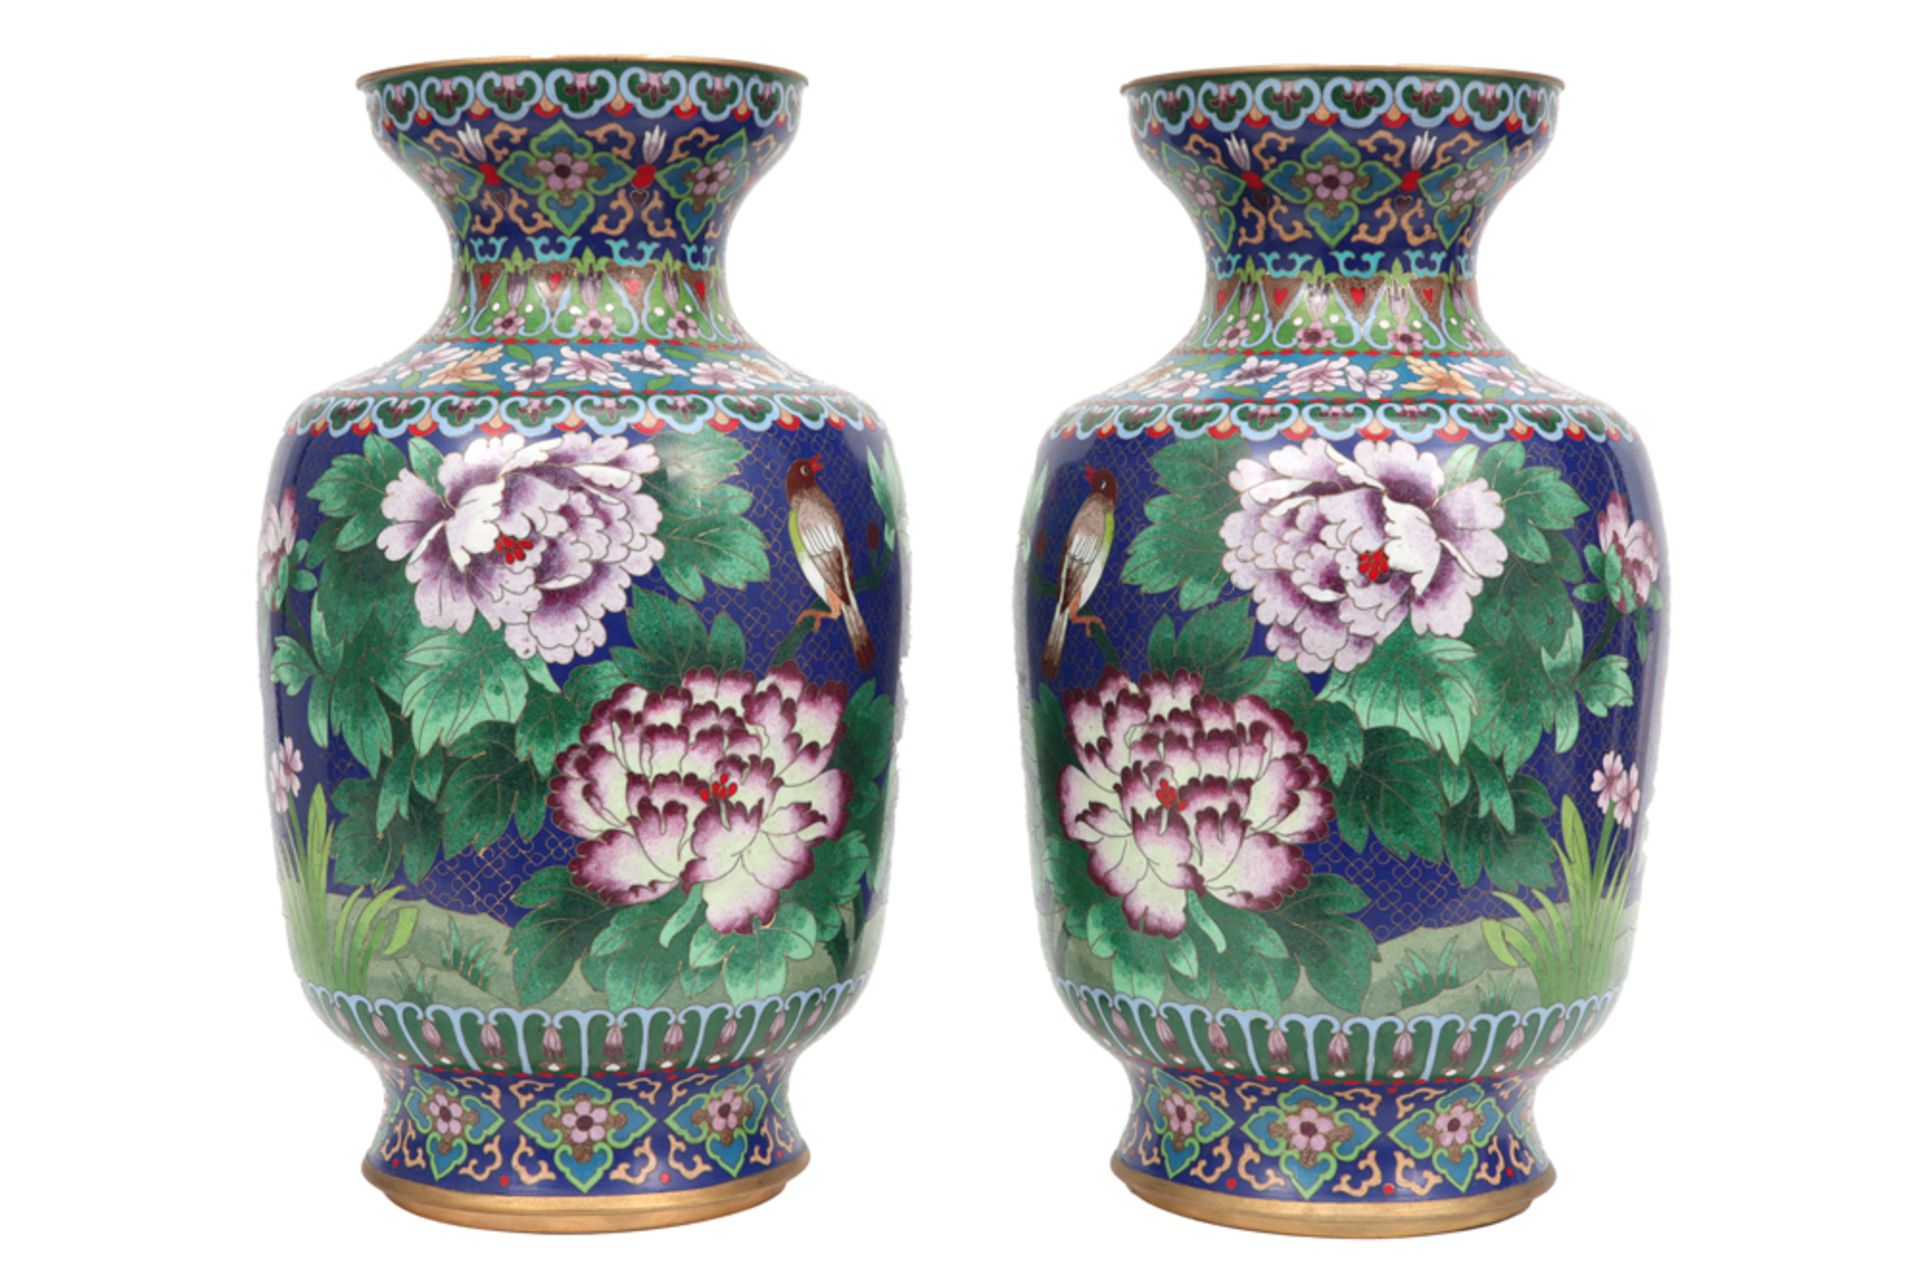 pair of Chinese cloisonné vintage vases || Paar Chinese vintage vazen in cloisonné met